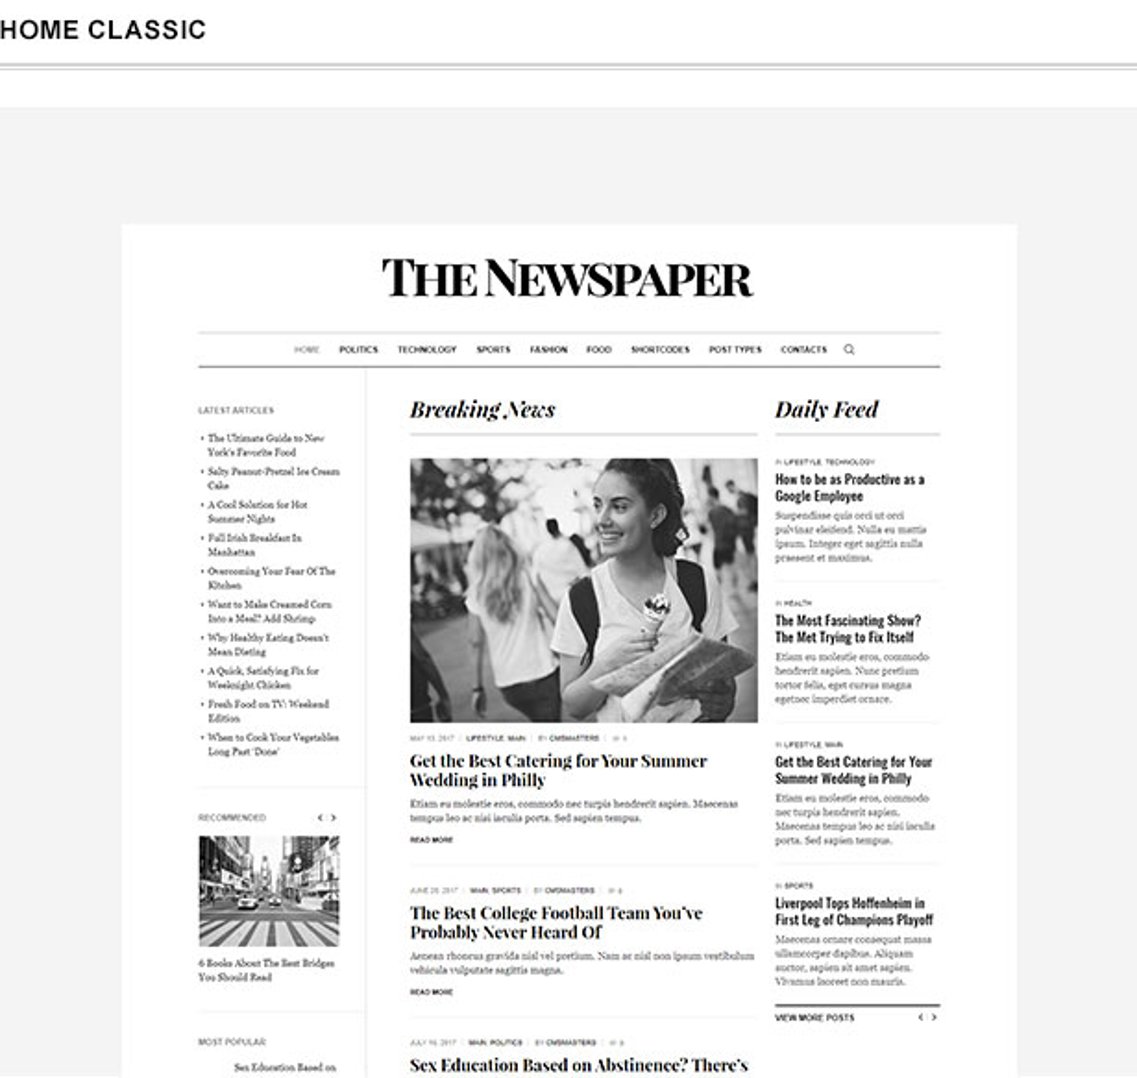 The Newspaper - Magazine Editorial WordPress Theme - Home Classic